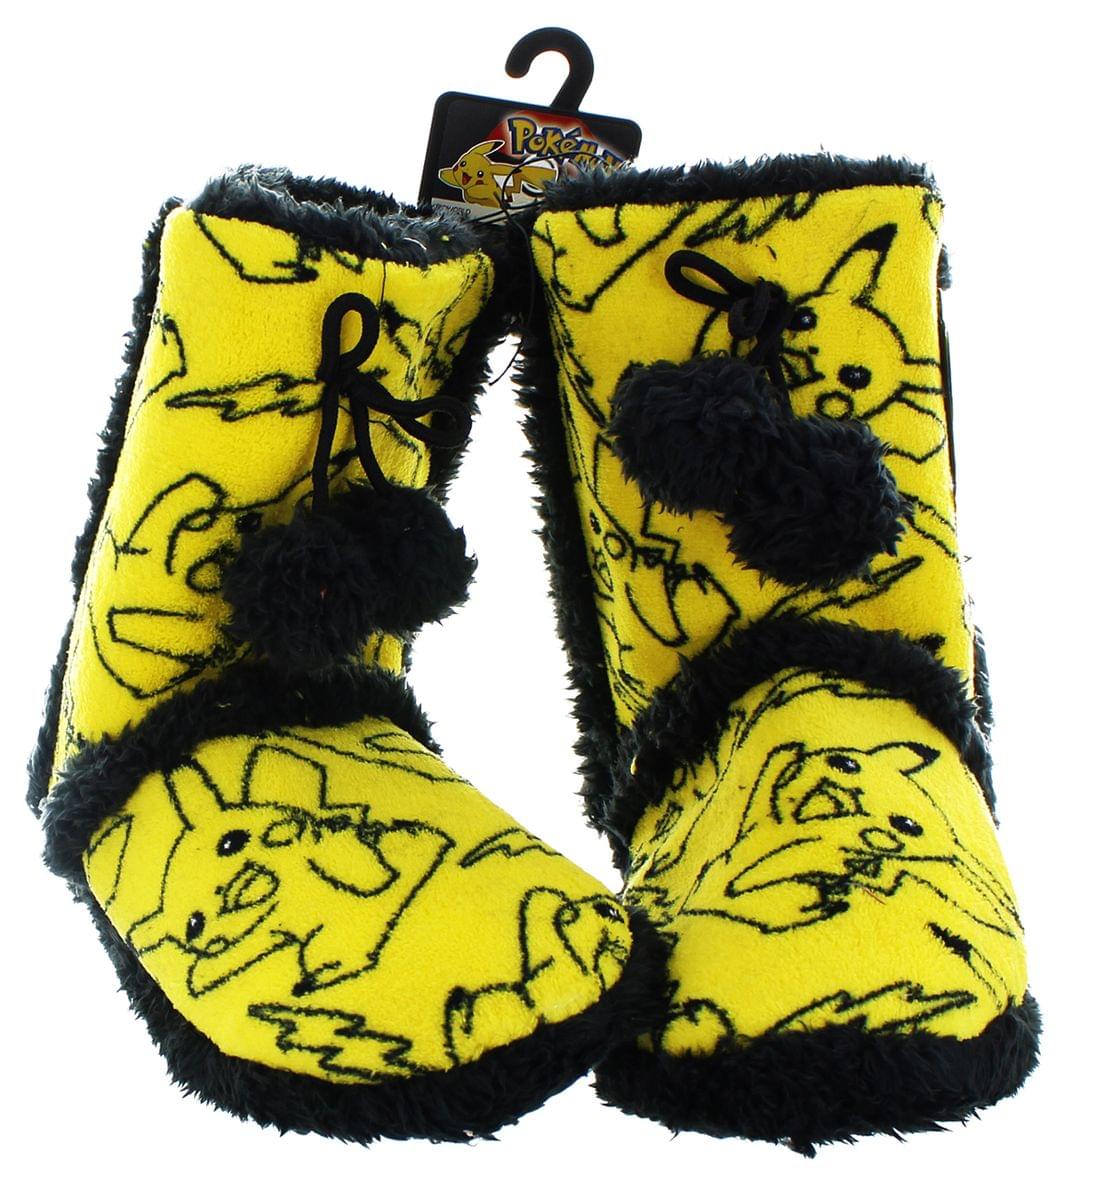 Pokemon Pikachu Women's Boot Slippers